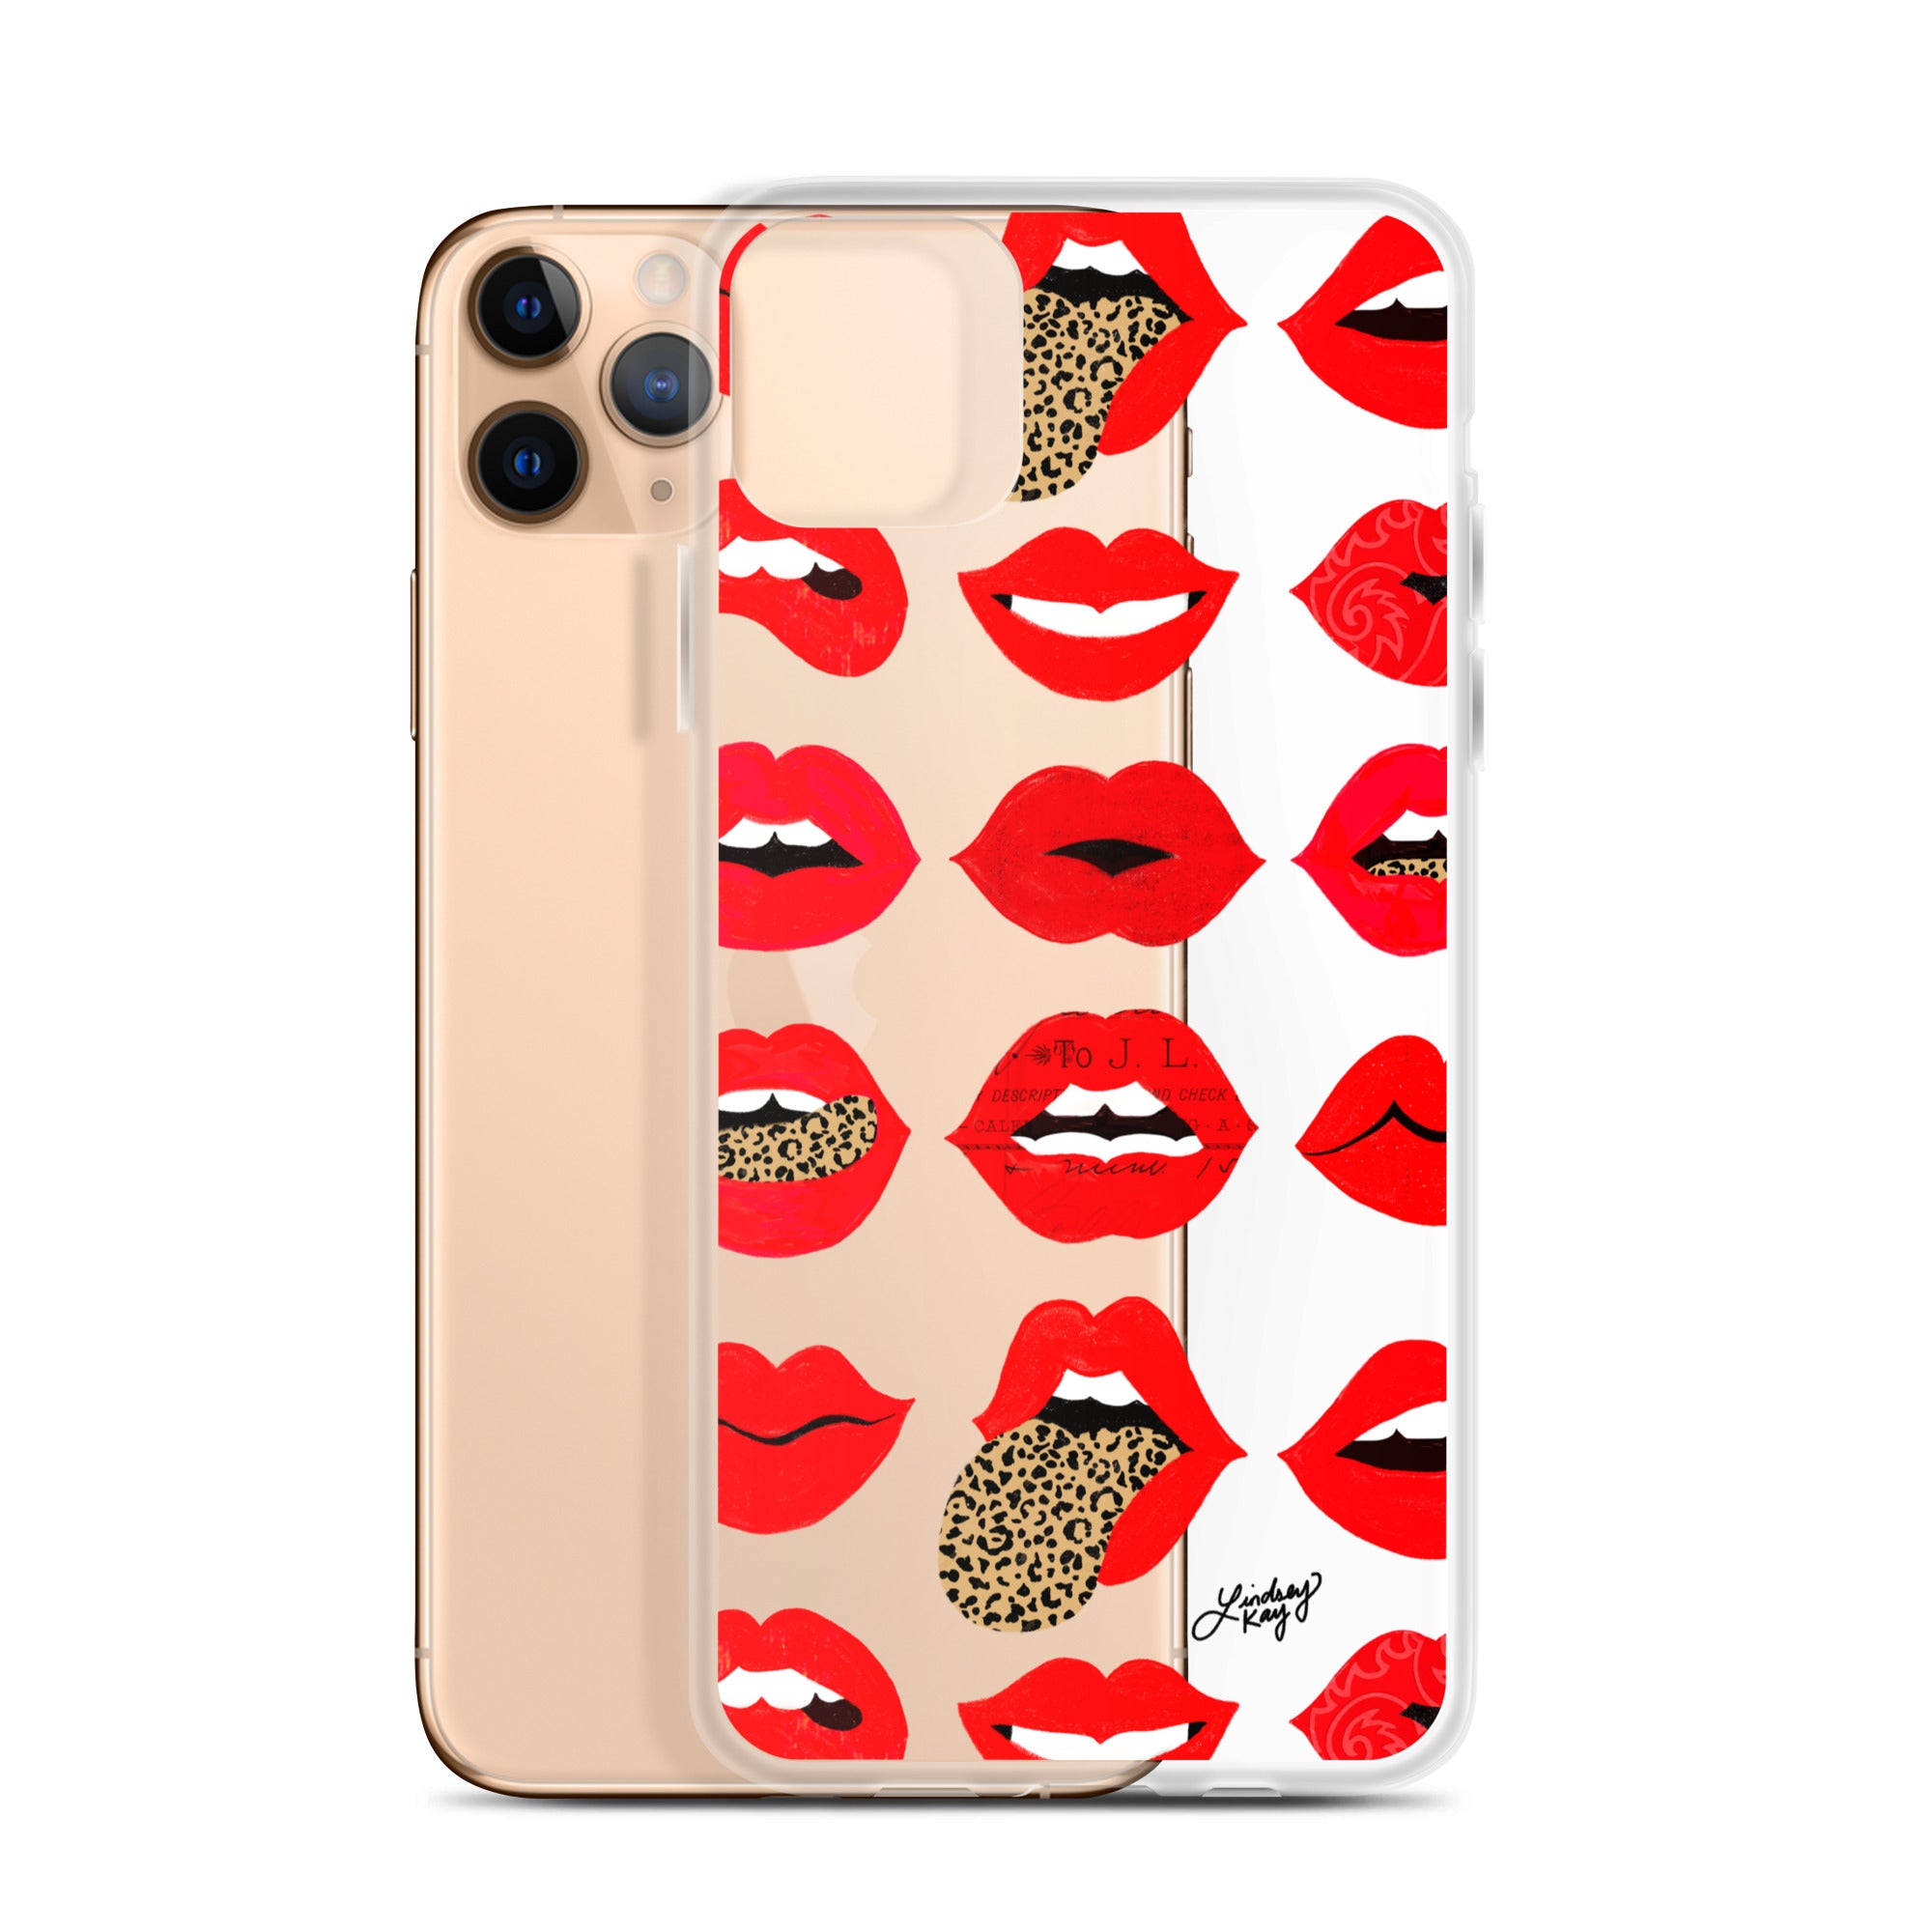 Labios de amor de leopardo - Funda transparente para iPhone®